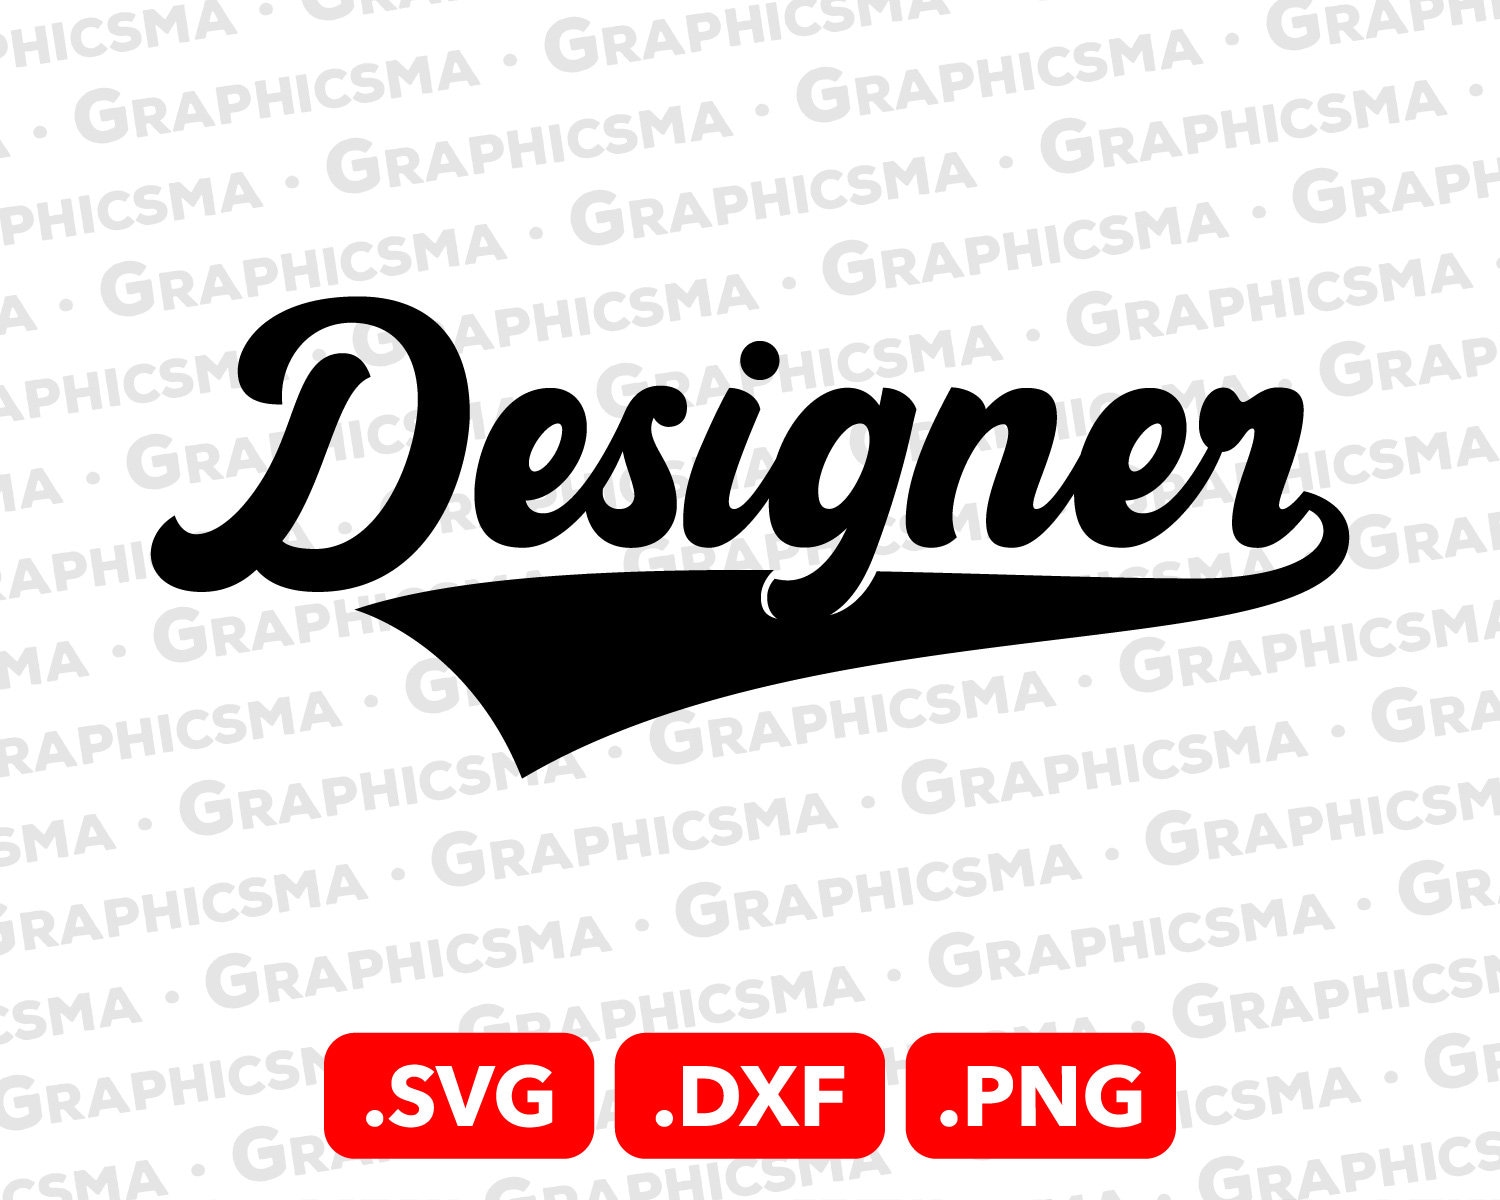 John Galliano Logo PNG Transparent & SVG Vector - Freebie Supply